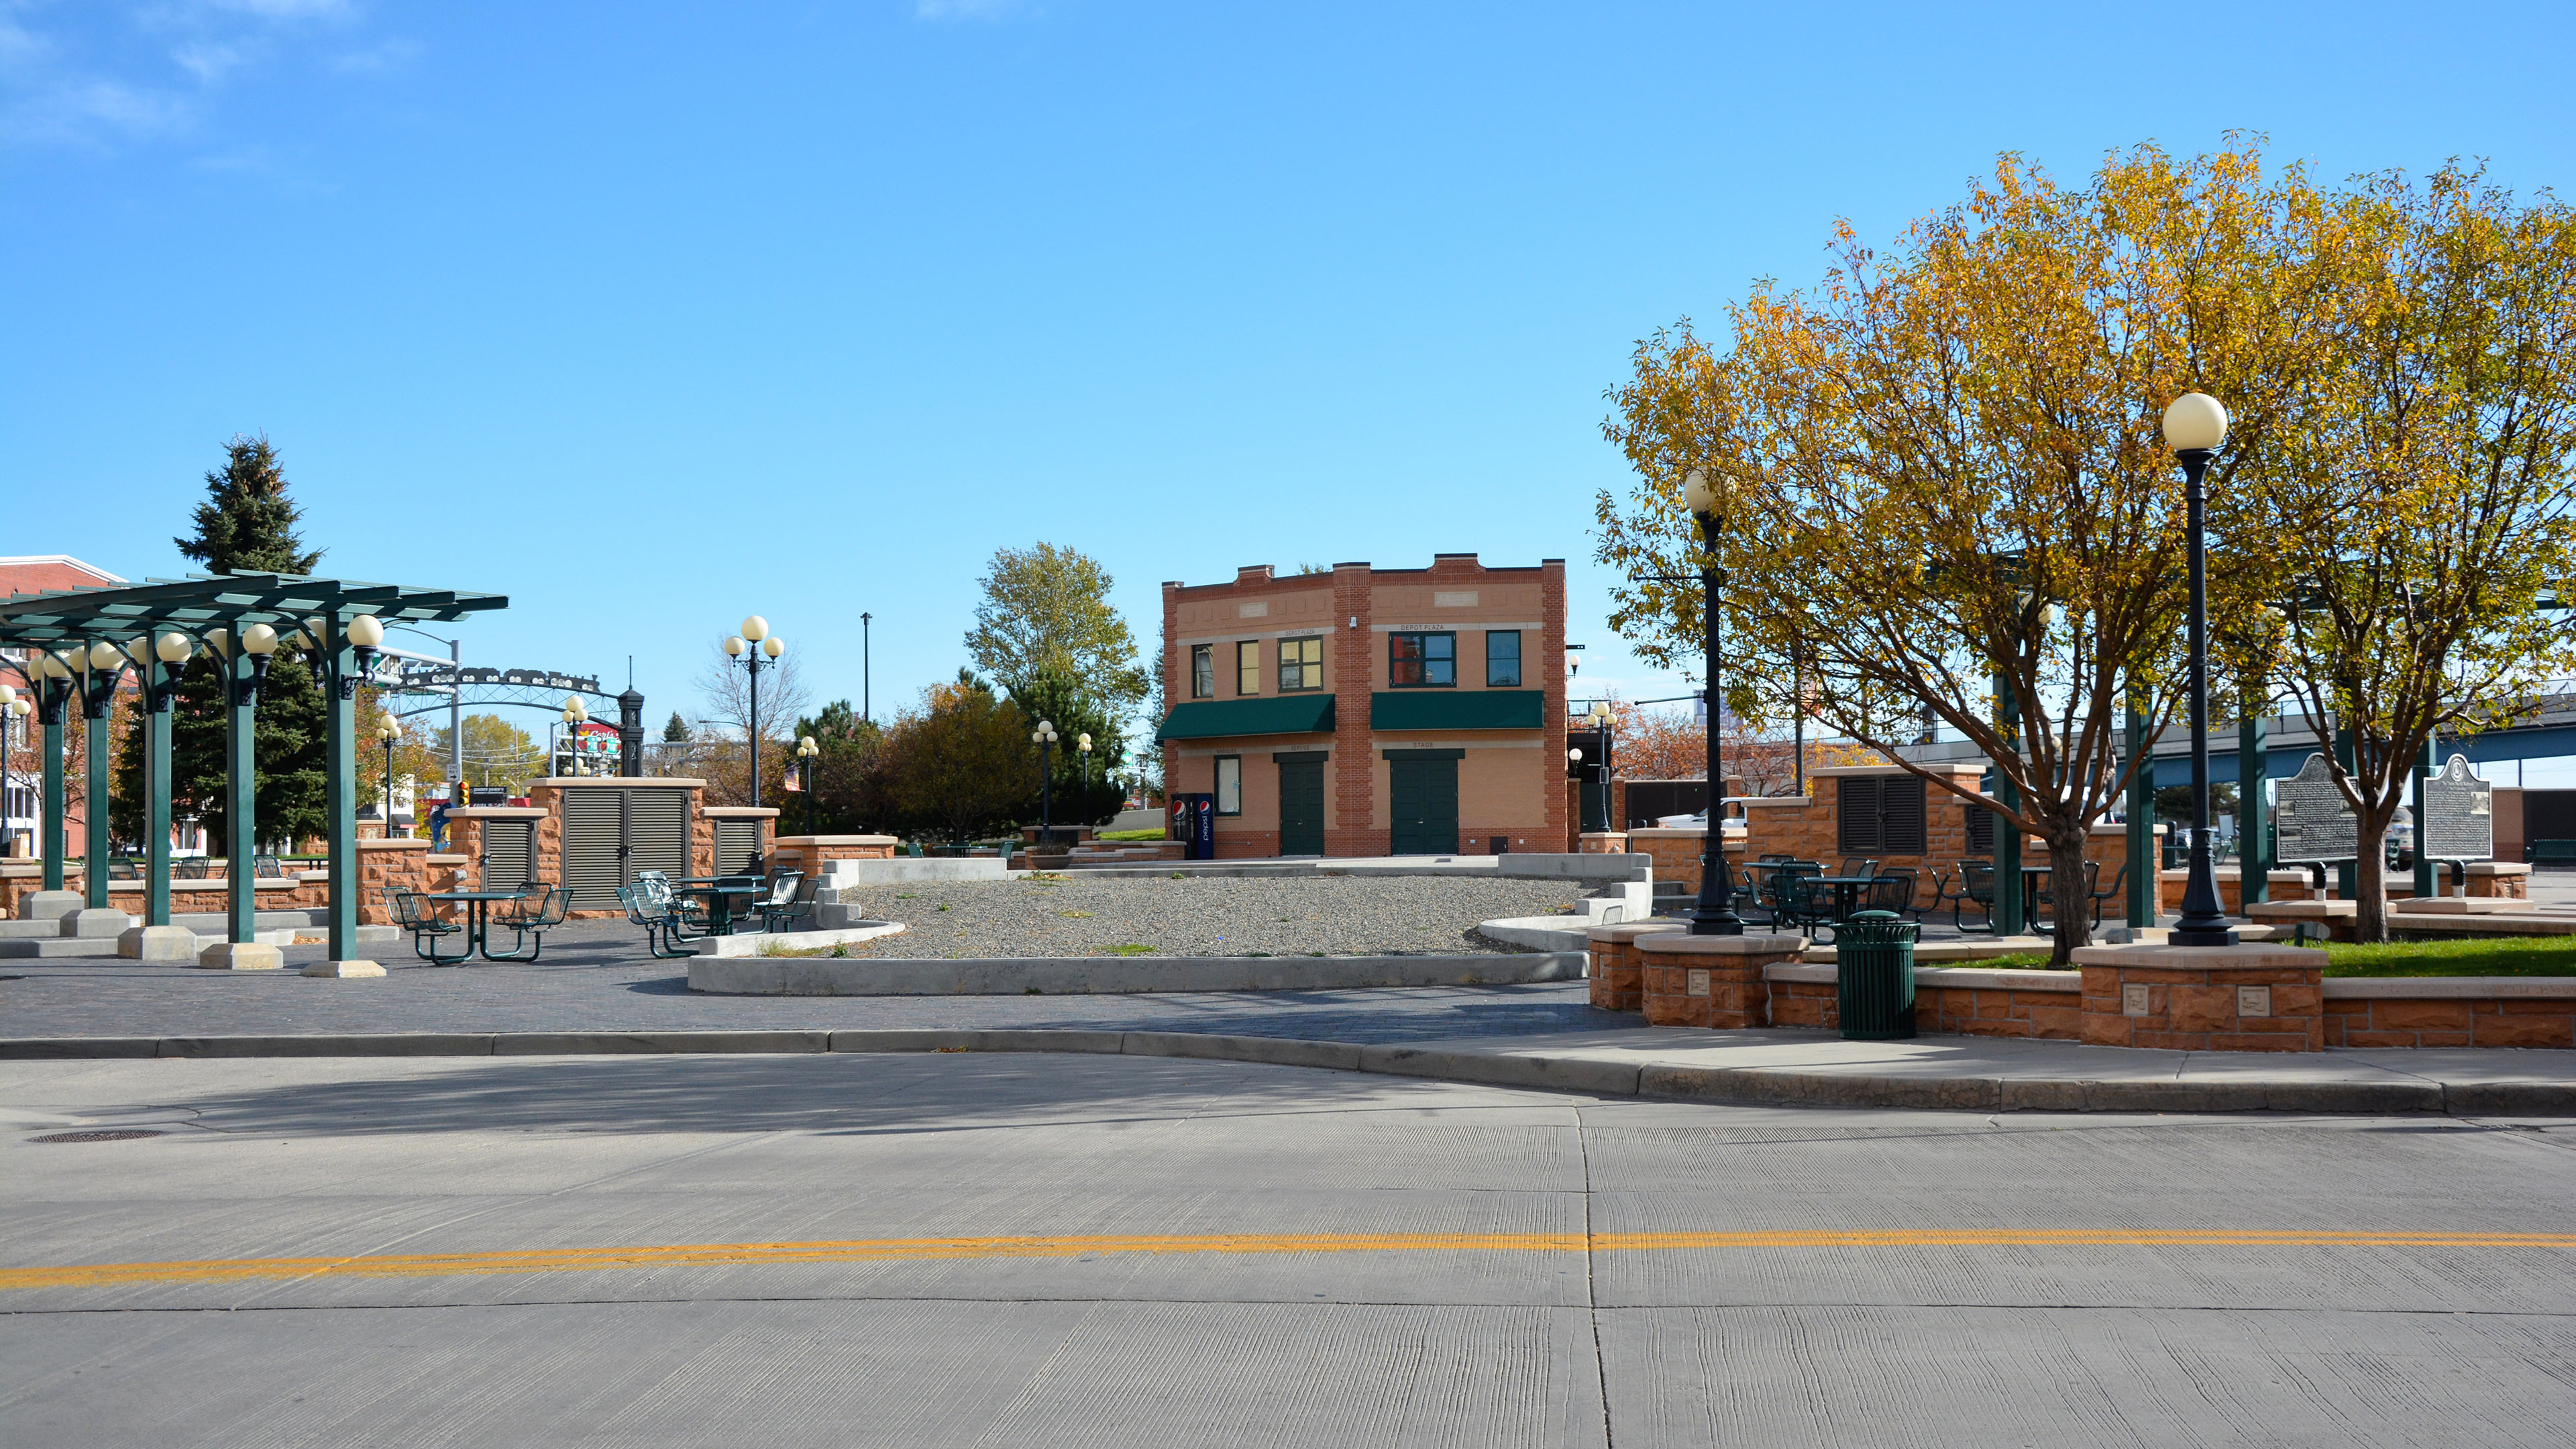 Cheyenne Depot Plaza